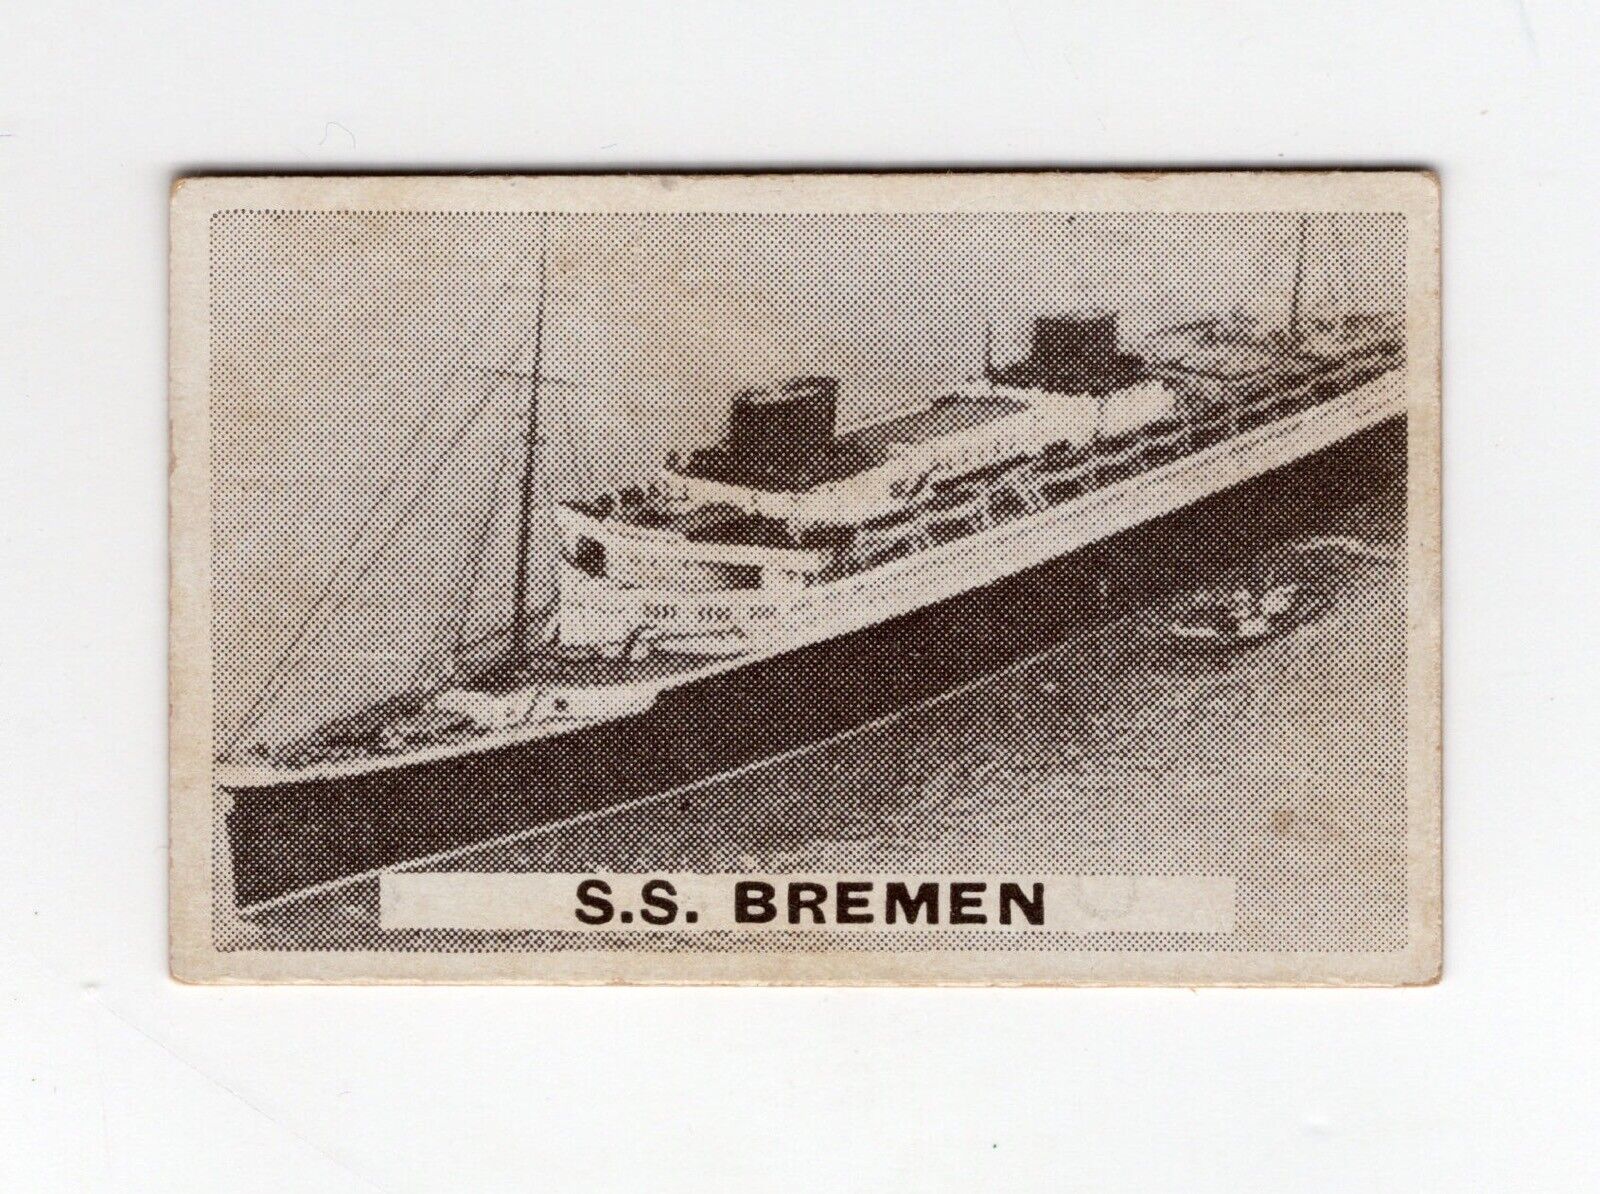 Sweetacres - Steamships 1930s. #16 S.S. Bremen (North German Llotd Line)